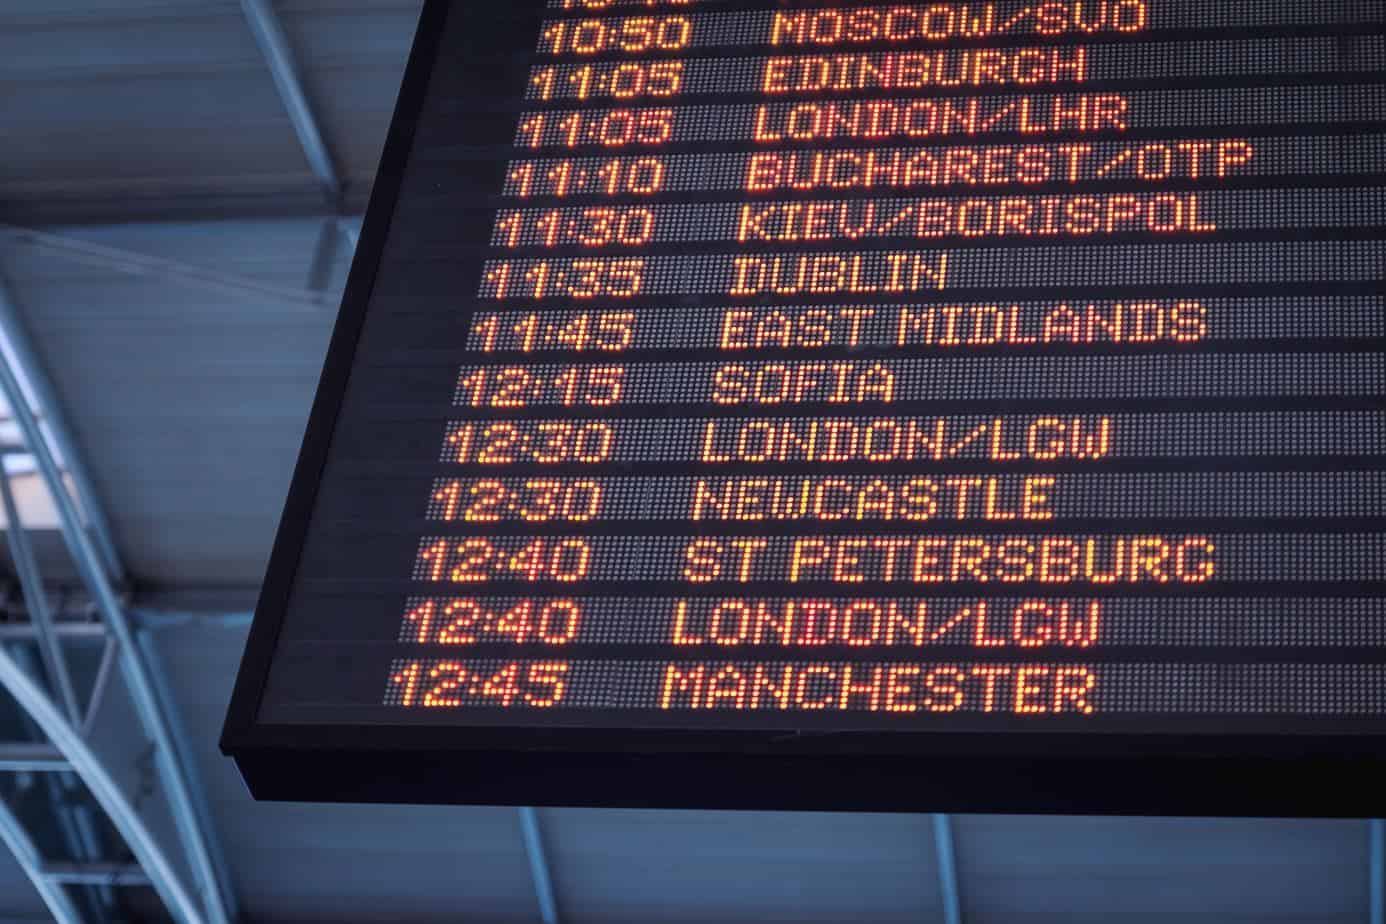 Flight destinations in board in airport